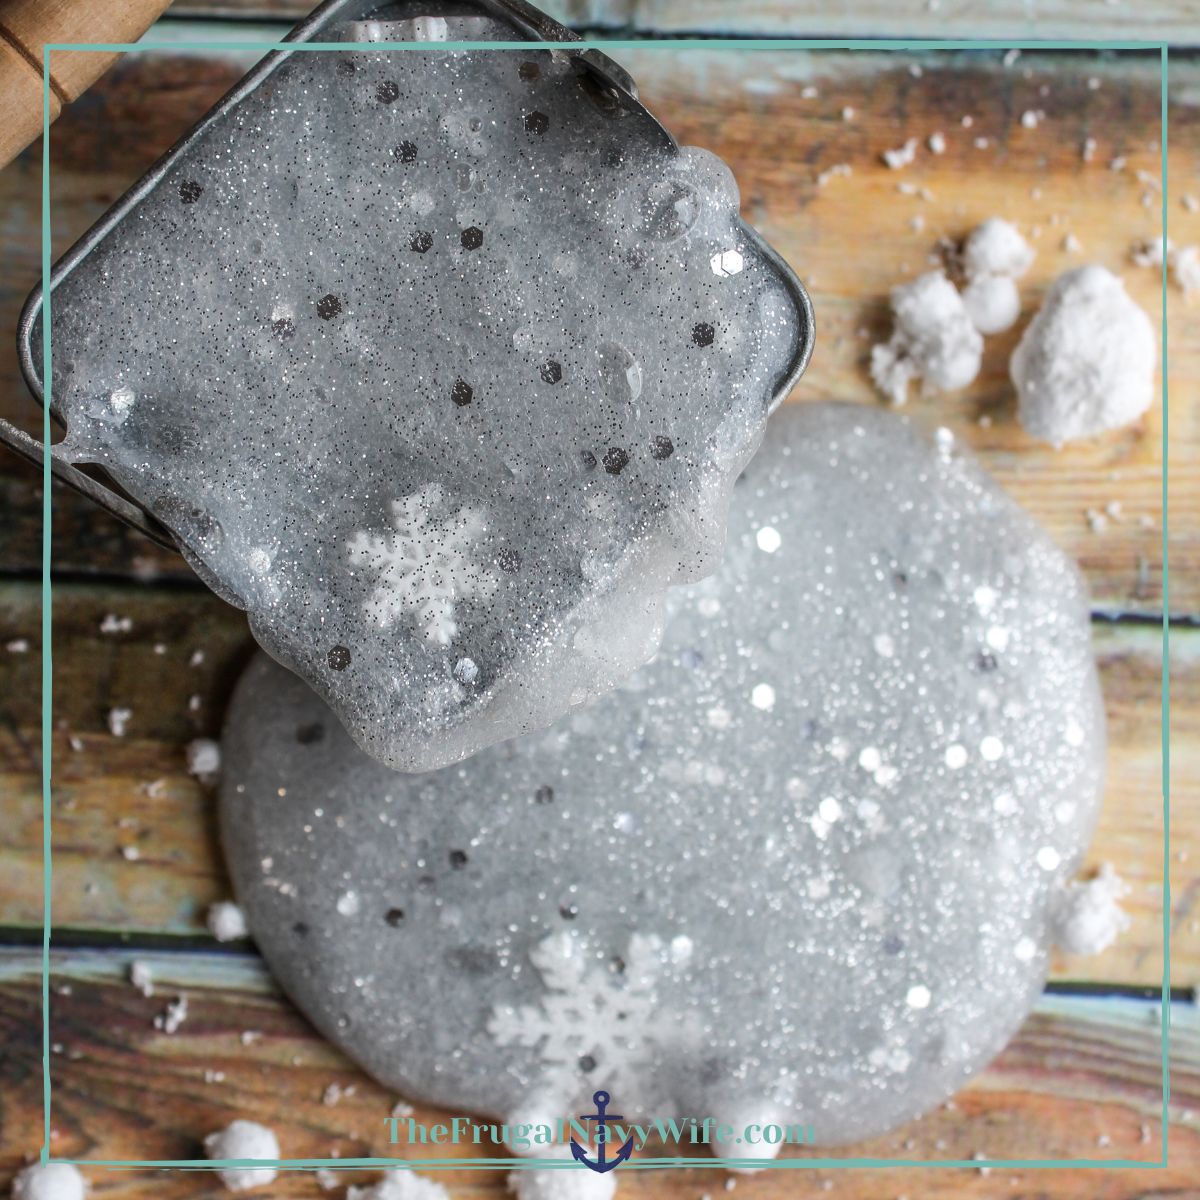 Snowflake Mix Ins Slime & Confetti Kit